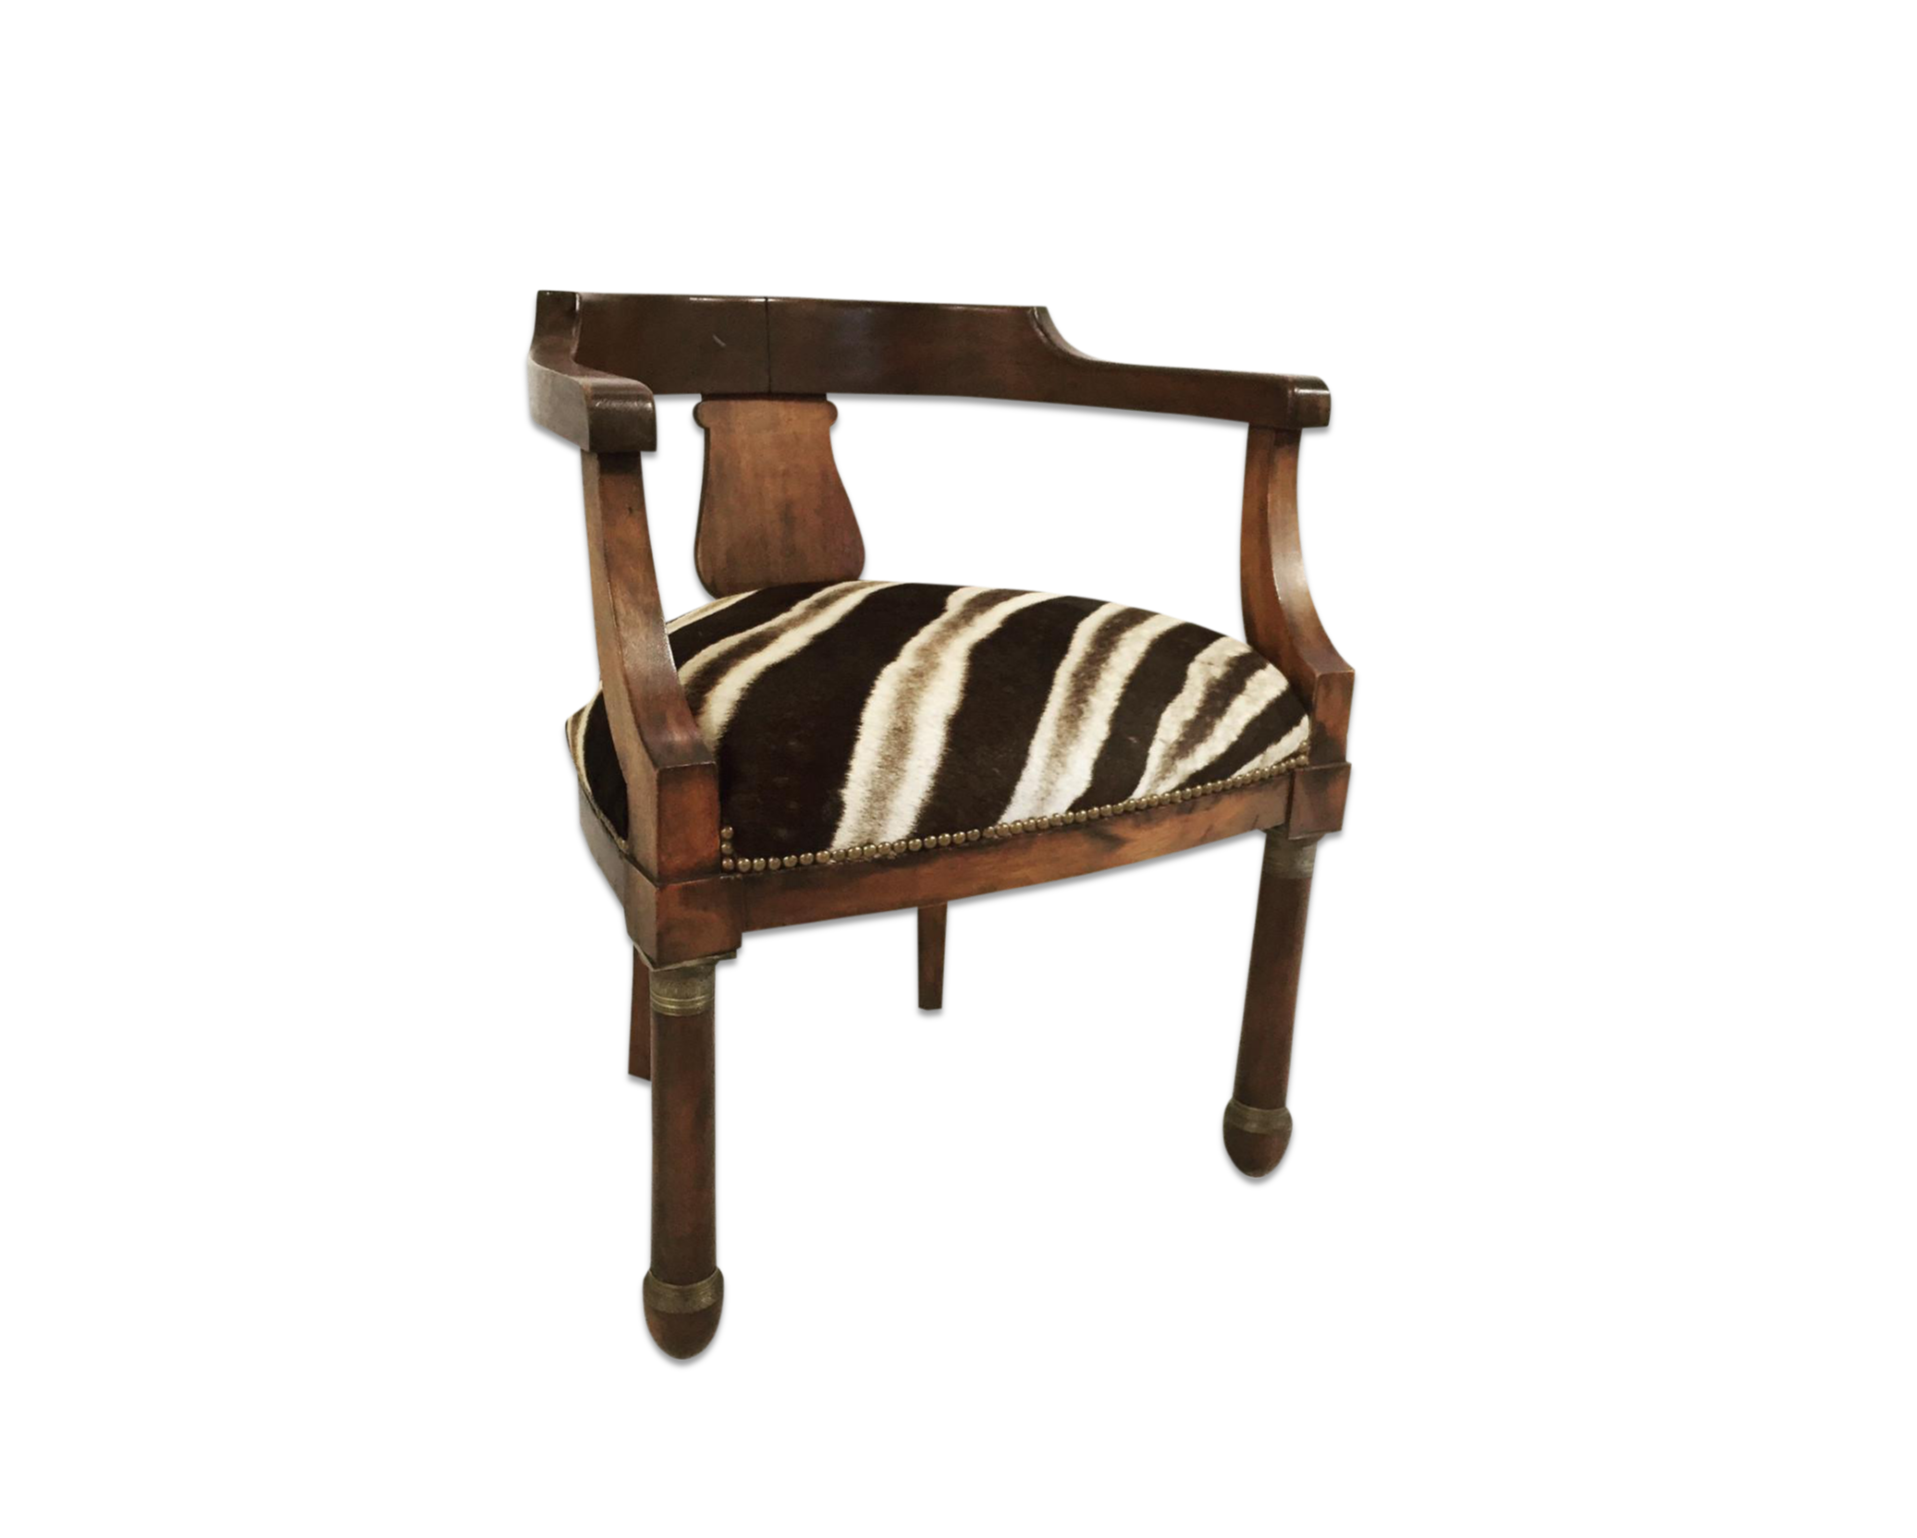 Walnut Barrel Chair in Zebra Hide - FORSYTH